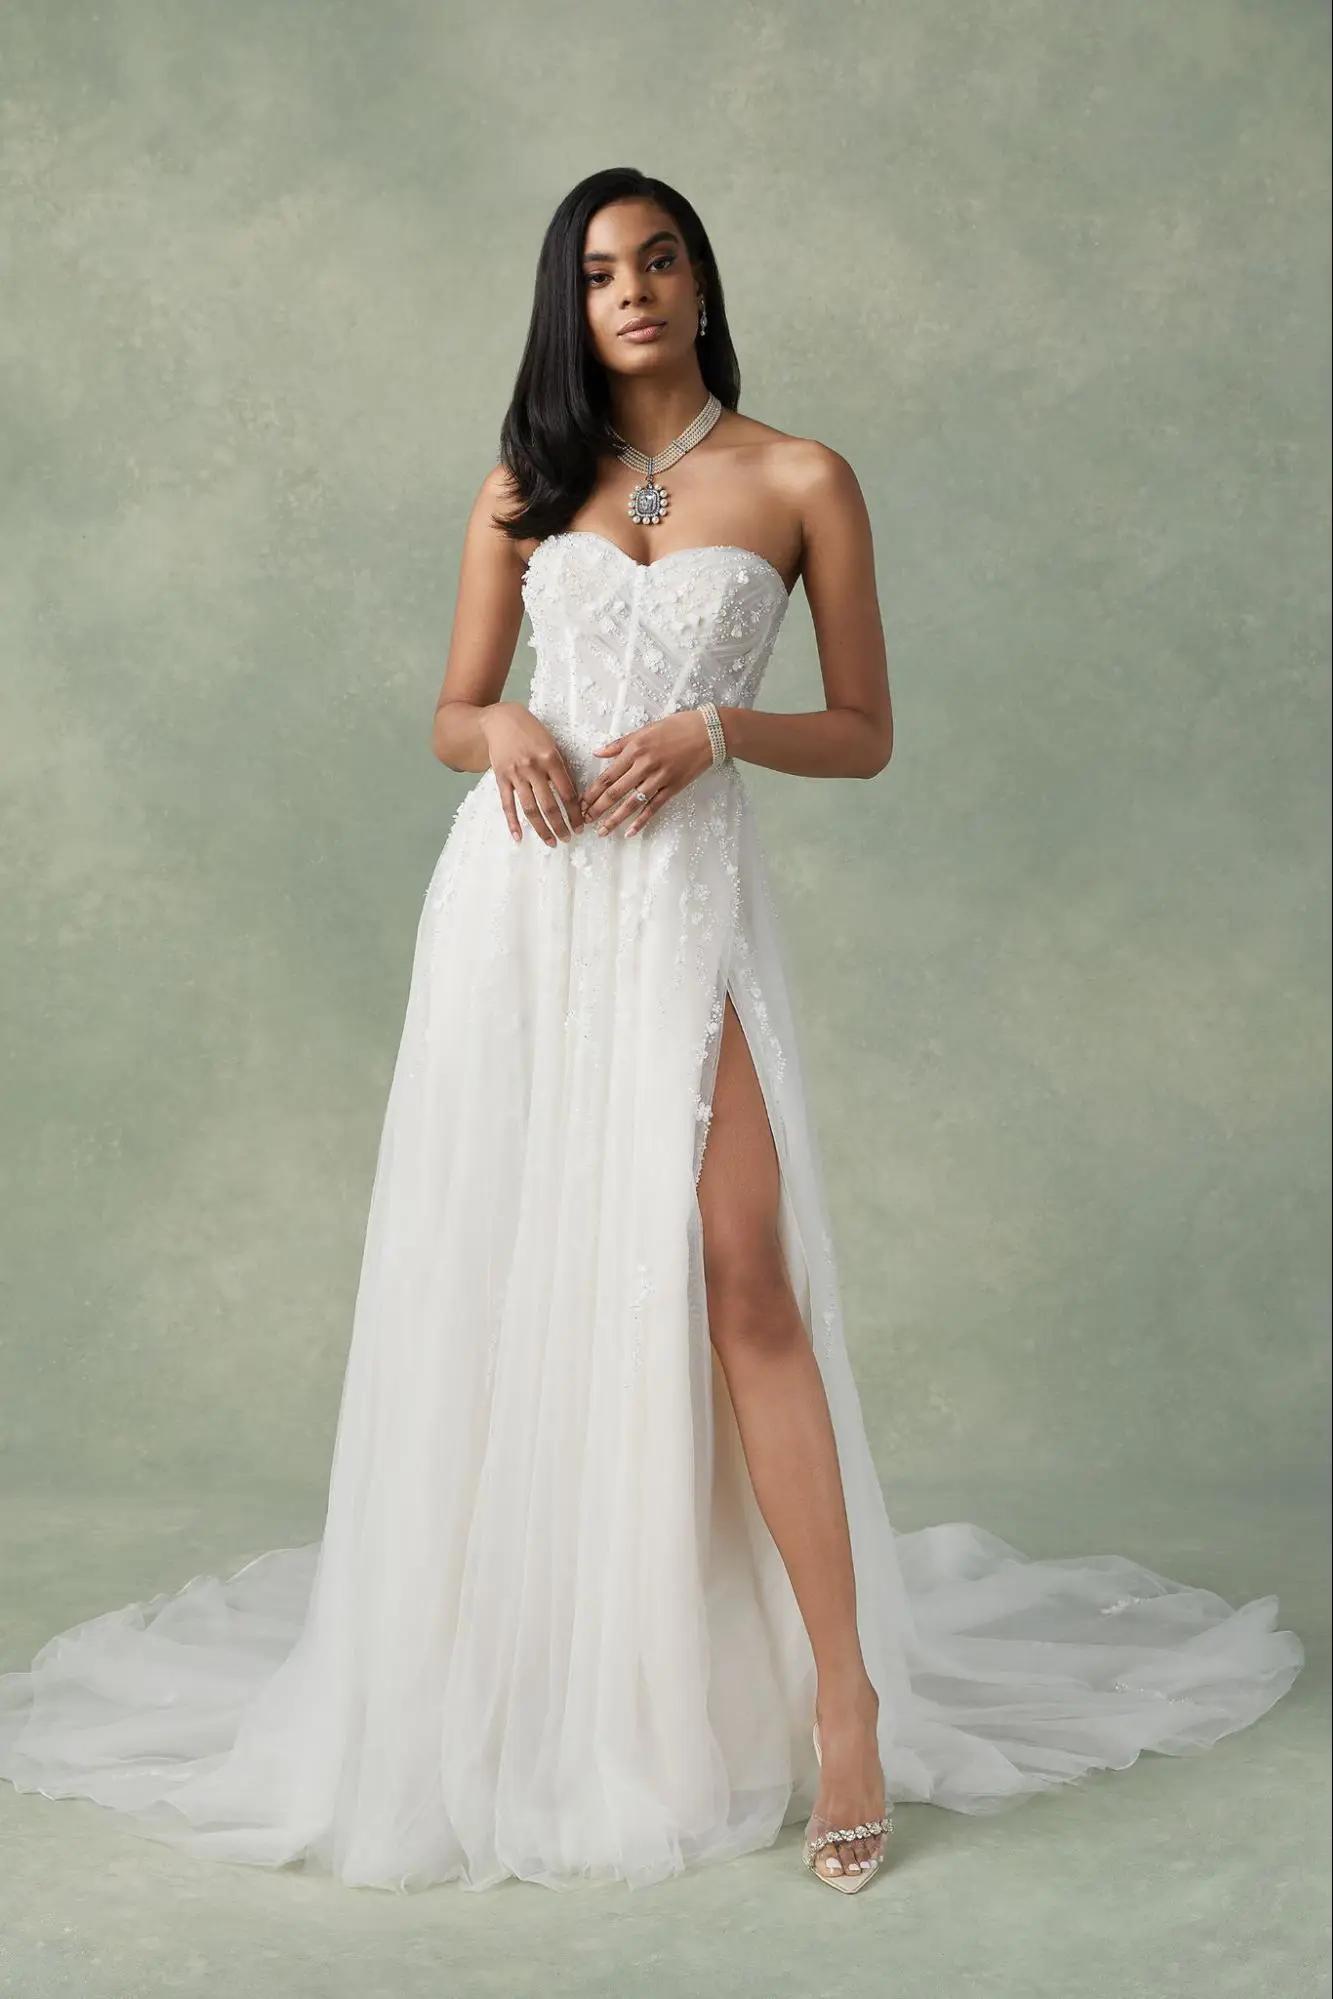 Florita wedding dress by Justin Alexander